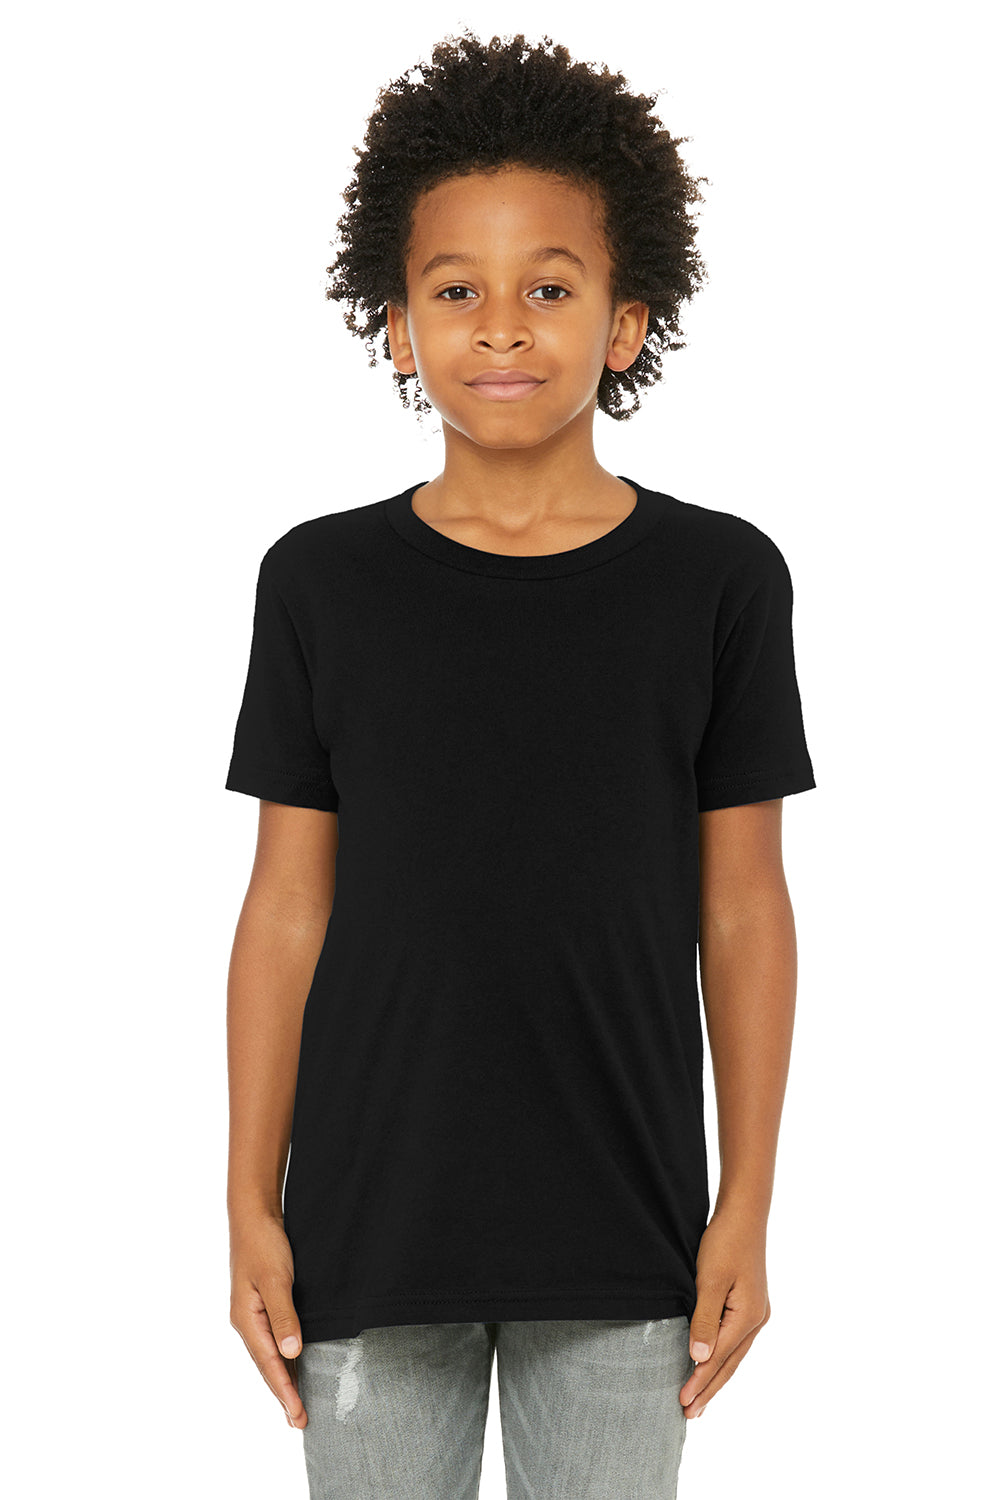 Bella + Canvas 3001Y Youth Jersey Short Sleeve Crewneck T-Shirt Black Model Front